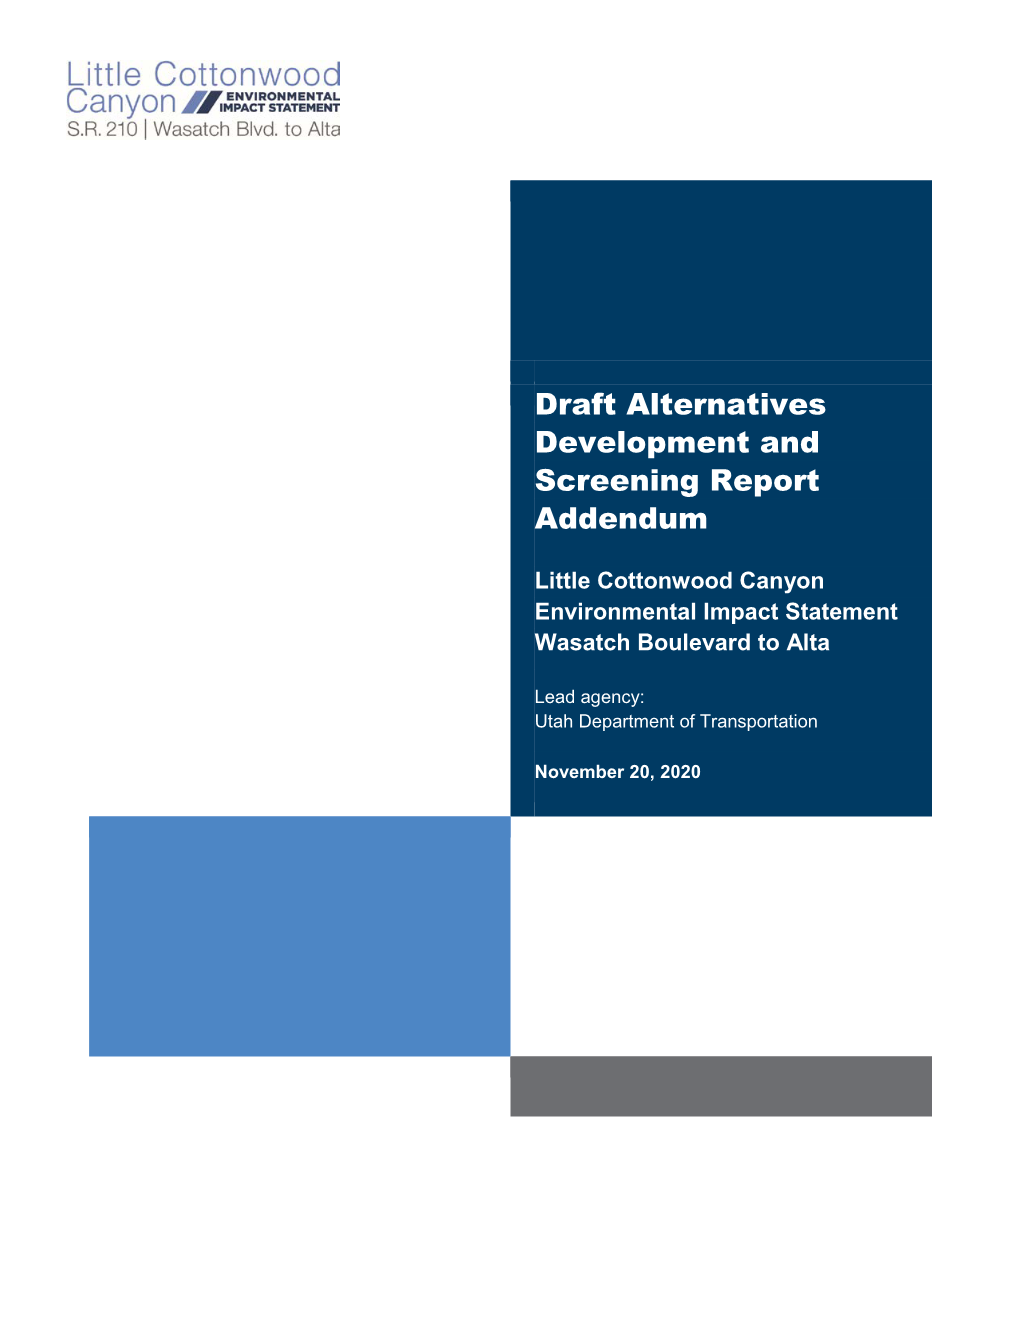 Draft Alternatives Development and Screening Report Addendum